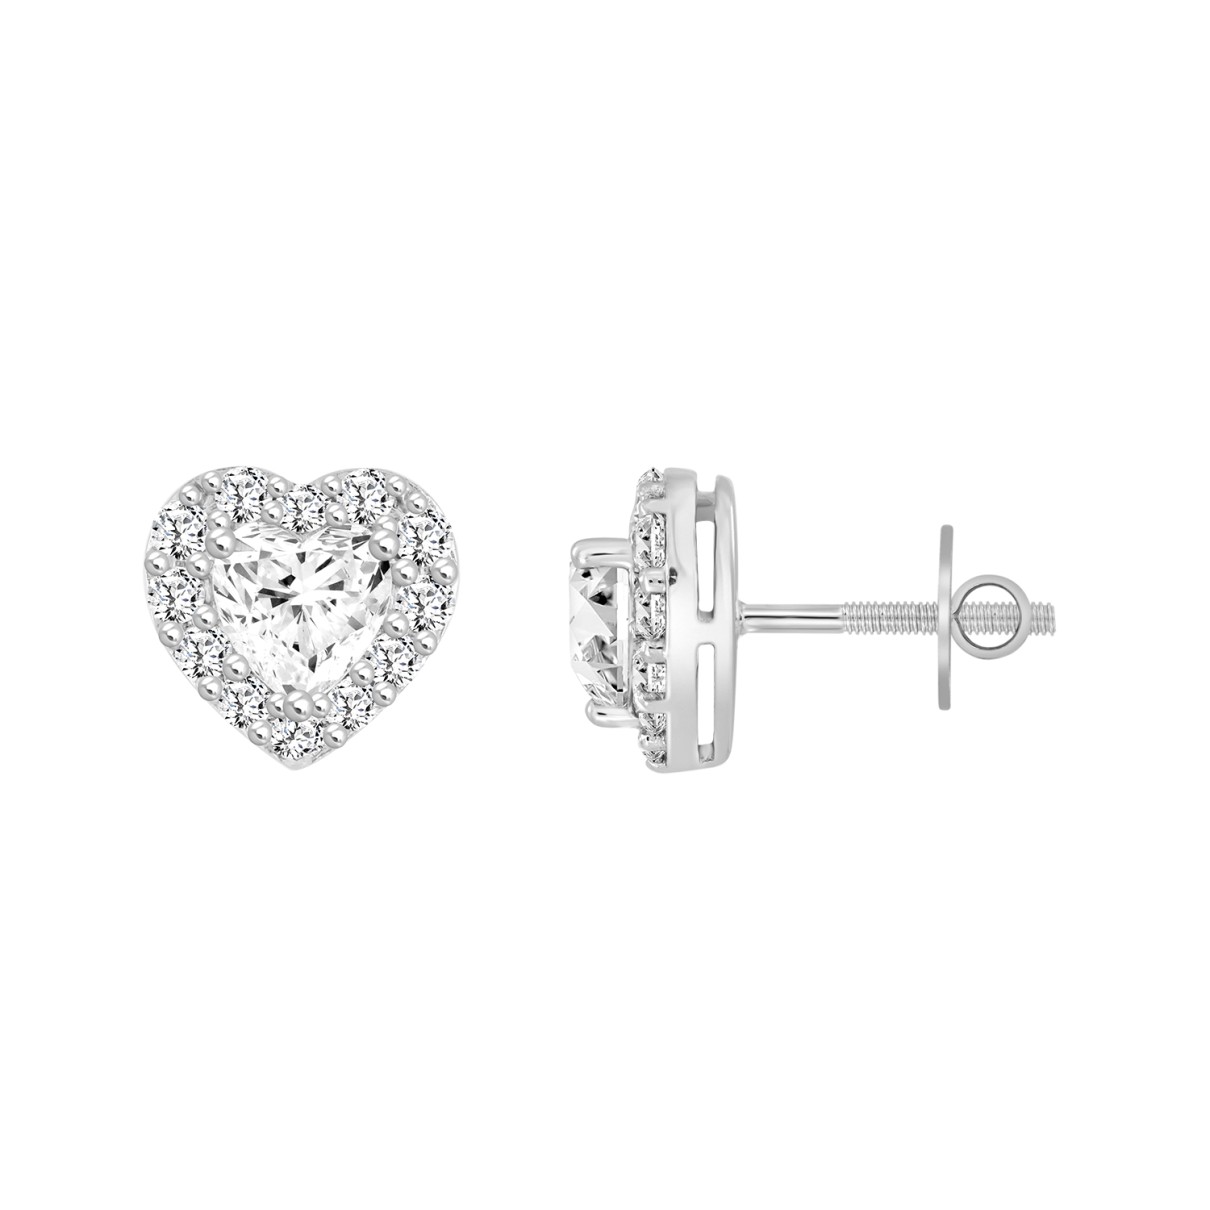 14K WHITE GOLD1 3/8CT ROUND / HEART DIAMOND LADIES EARRINGS (CENTER STONE HEART DIAMOND 1CT )